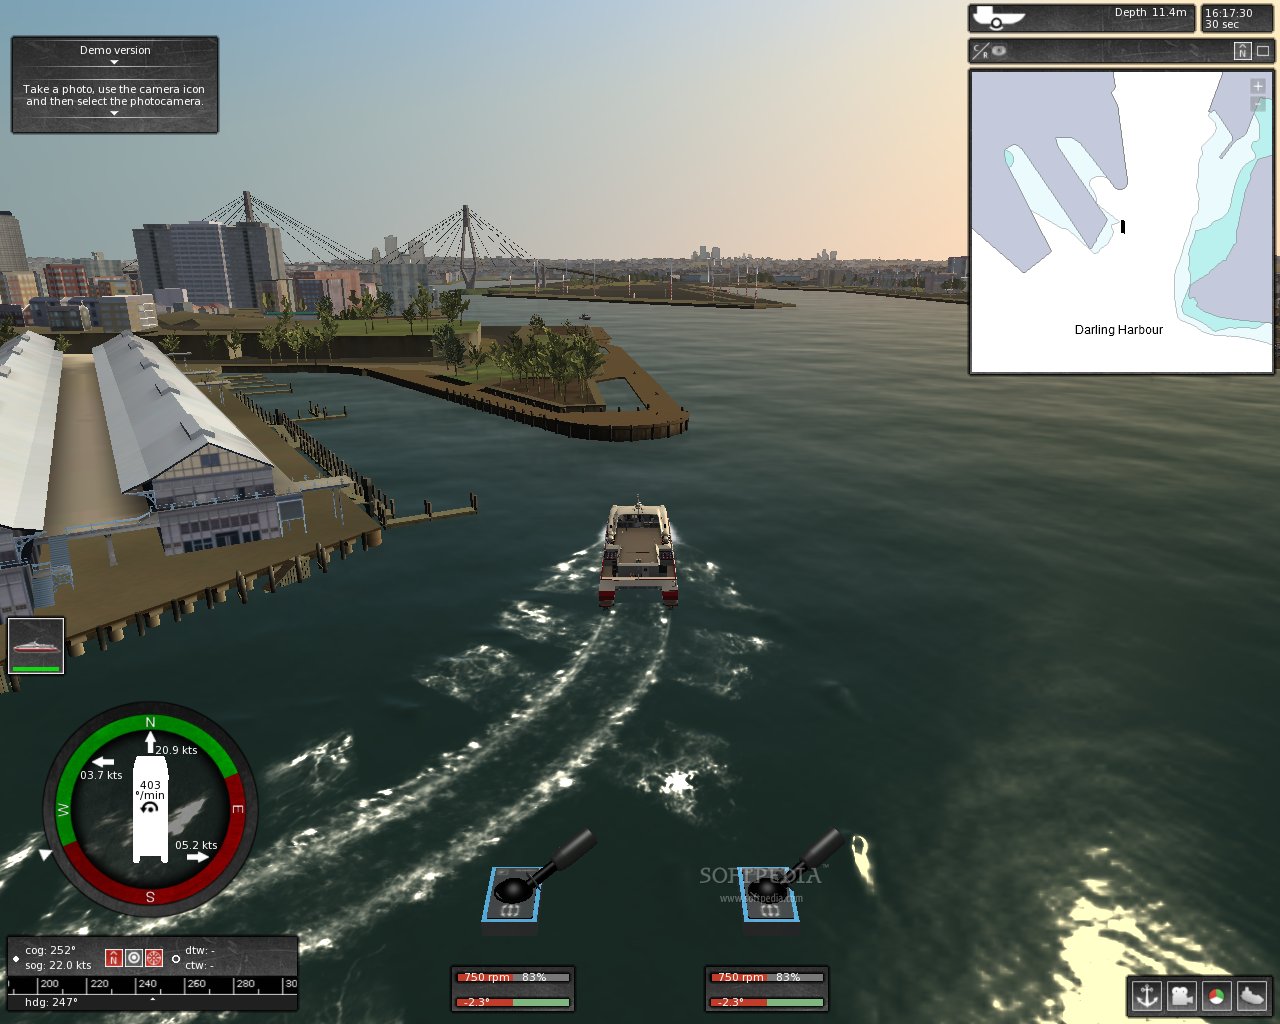 ship simulator extremes download demo